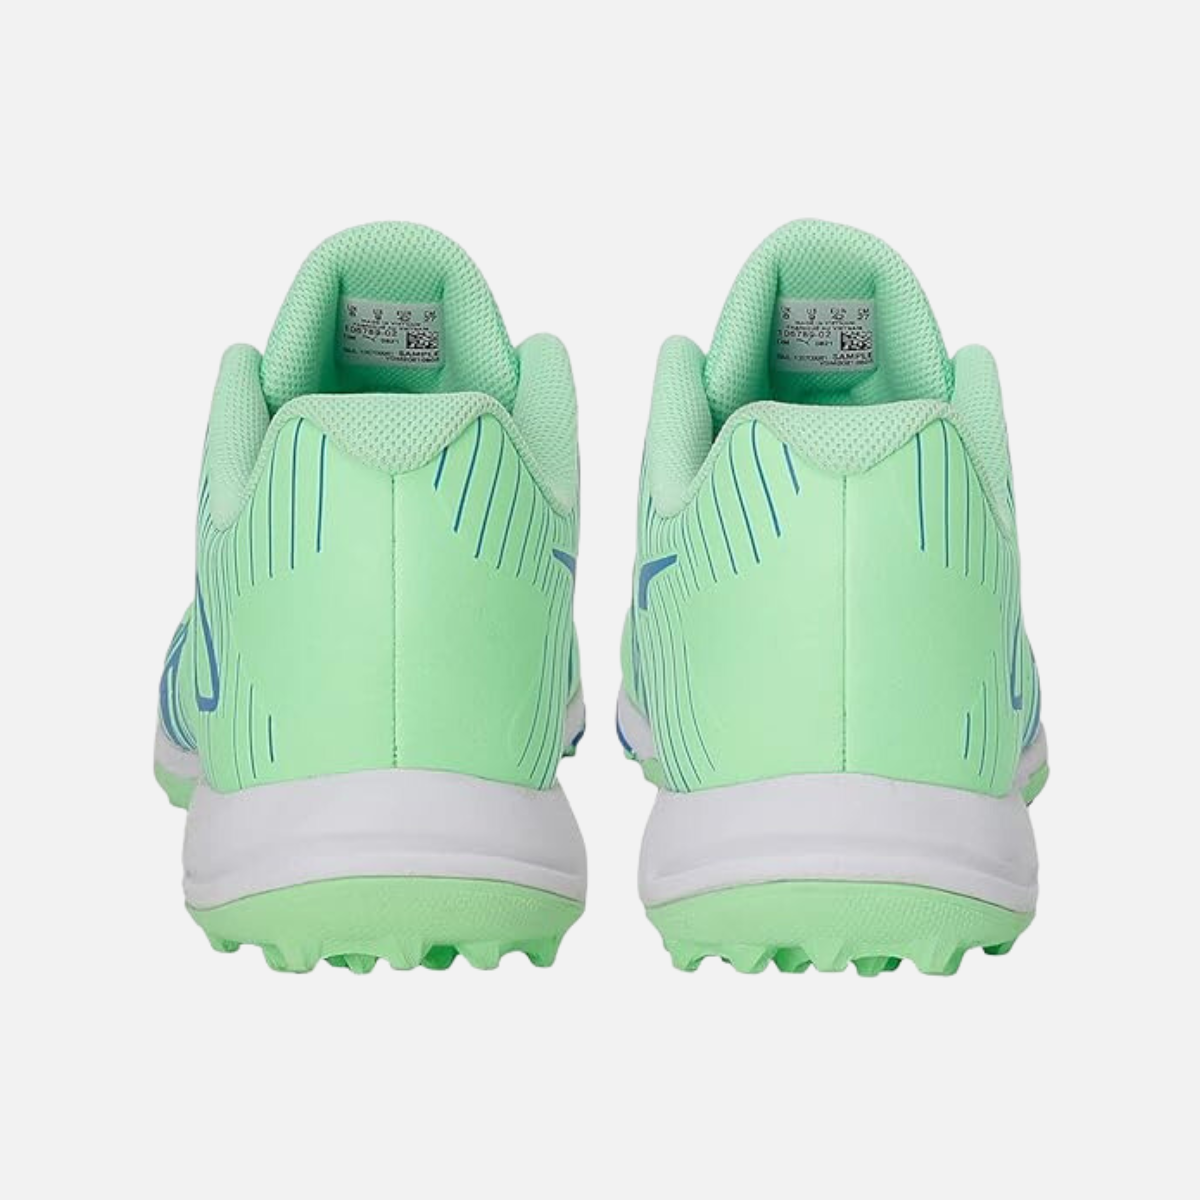 Puma 22 Fh Rubber Men's Cricket Shoe - Elektro Green/Bluemazing-White